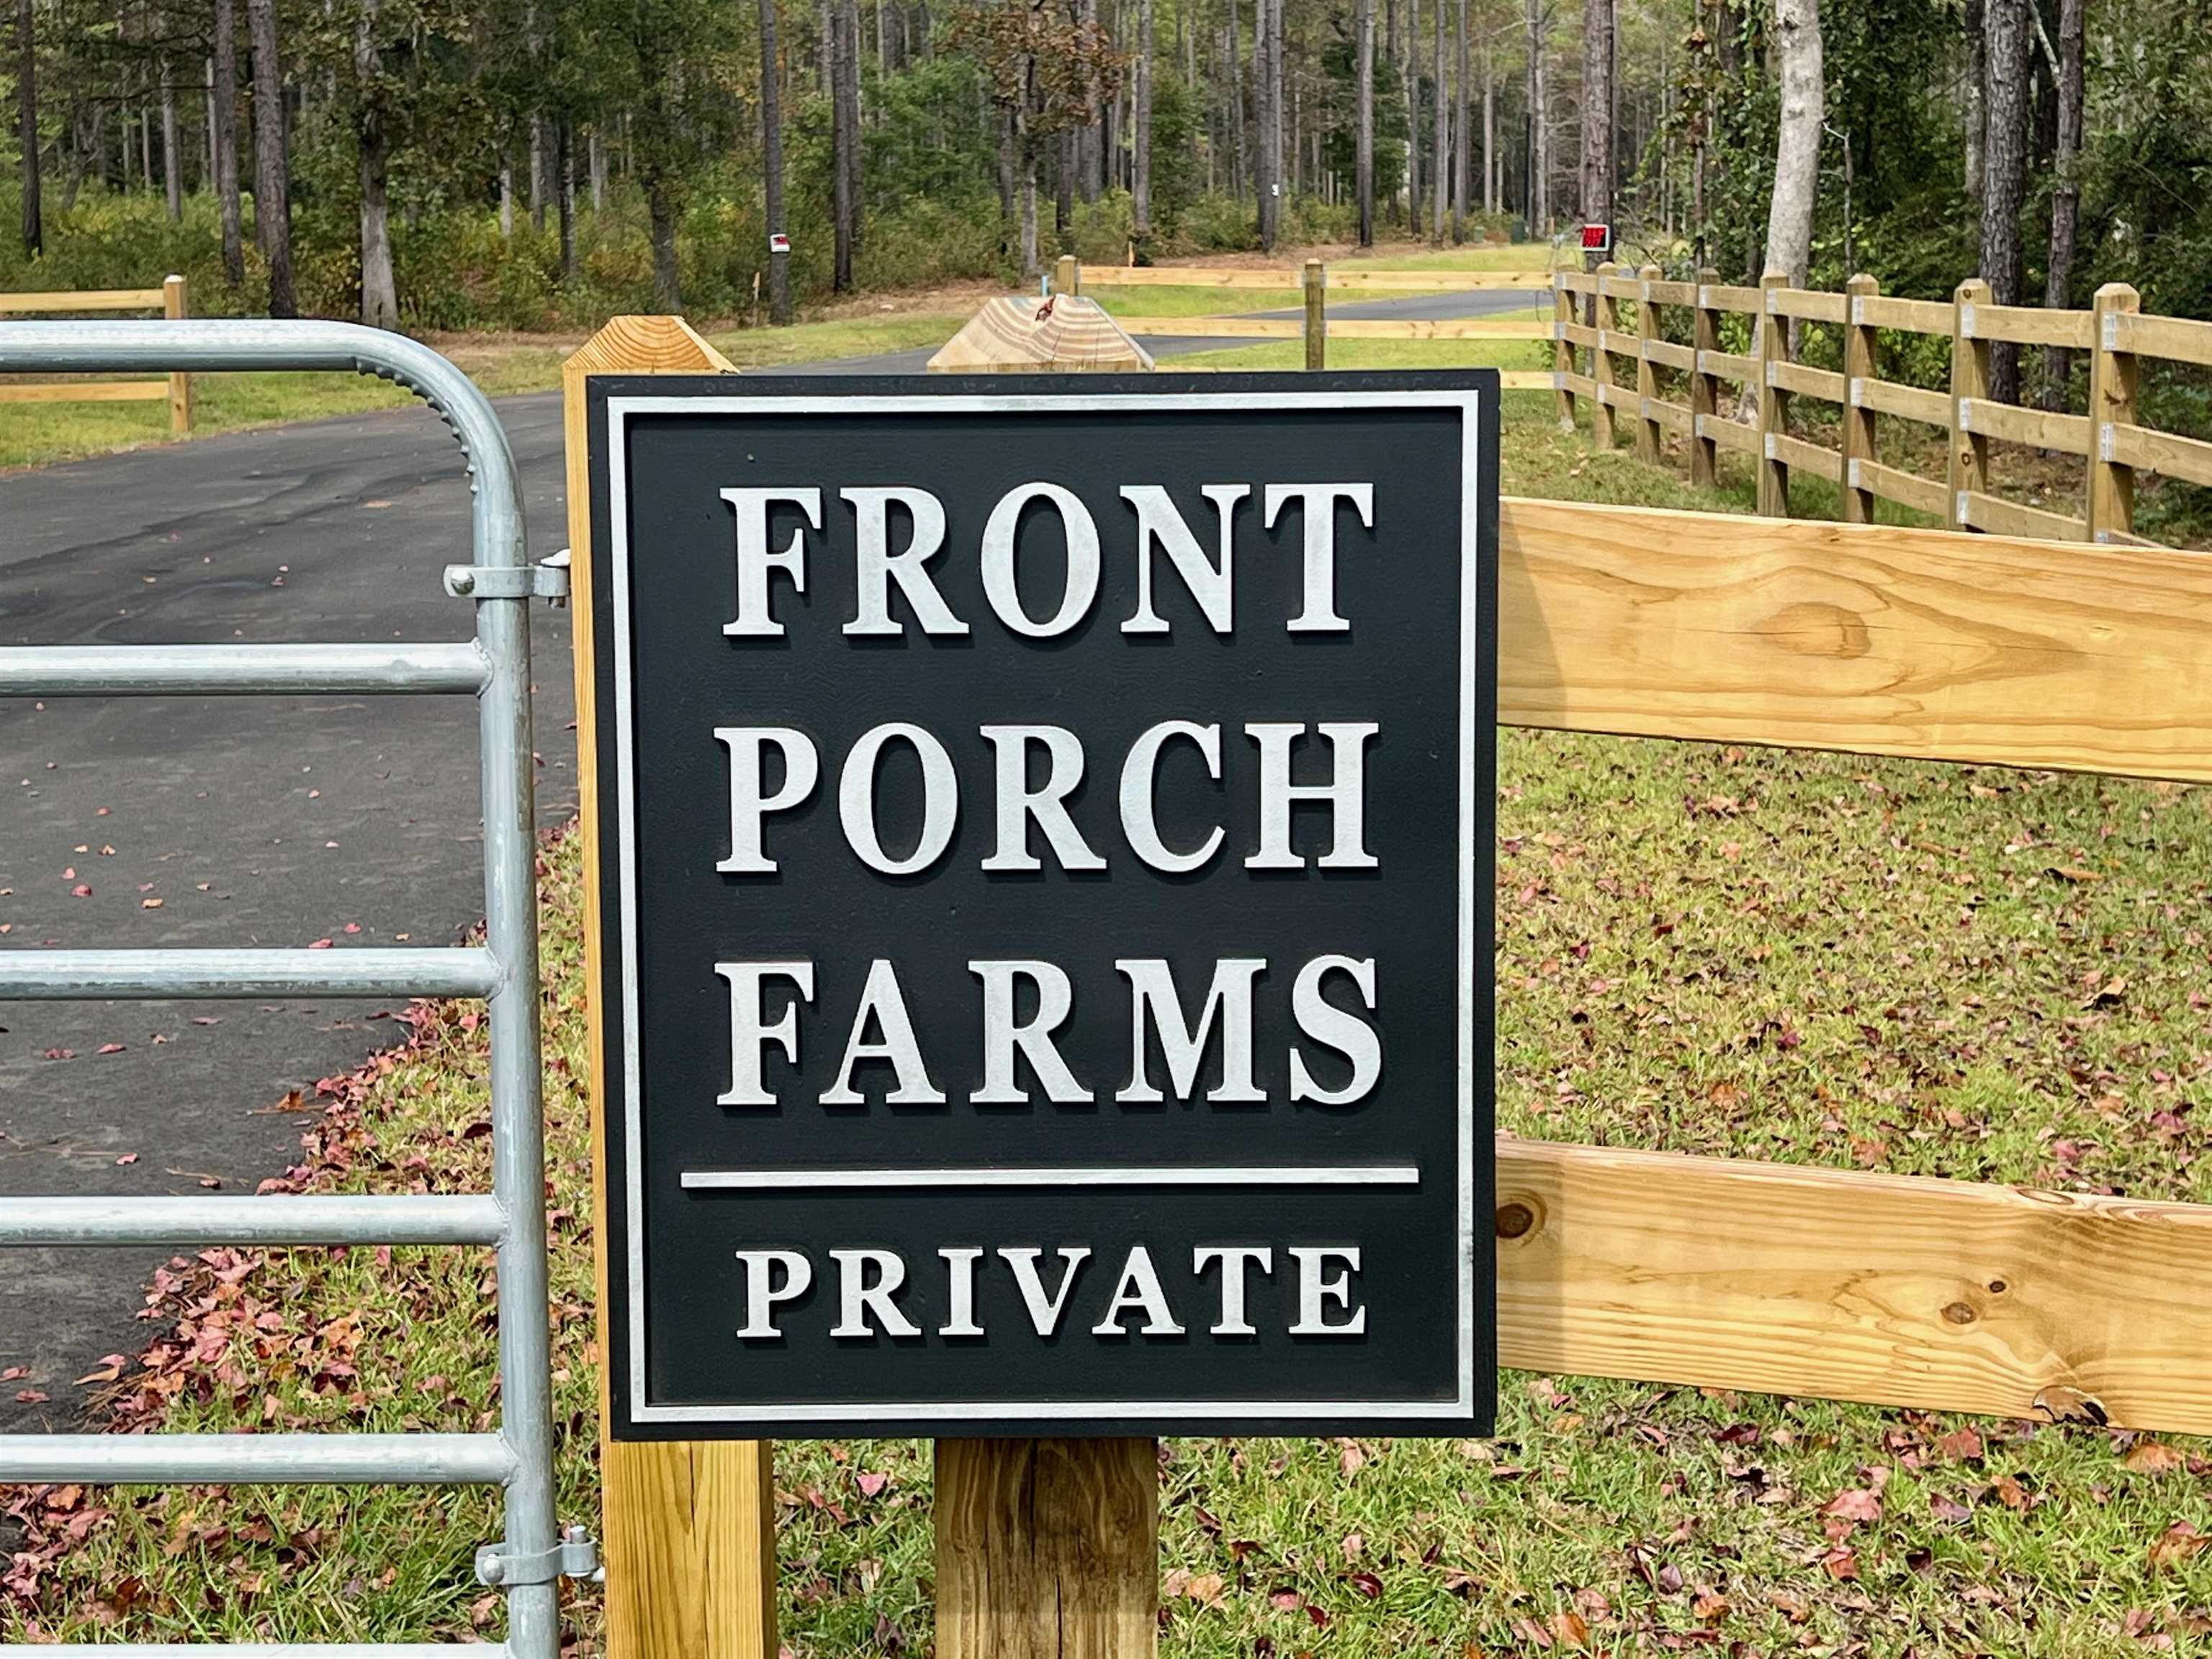 Lot 9 Porch Farm,TALLAHASSEE,Florida 32309,Lots and land,Porch Farm,368839